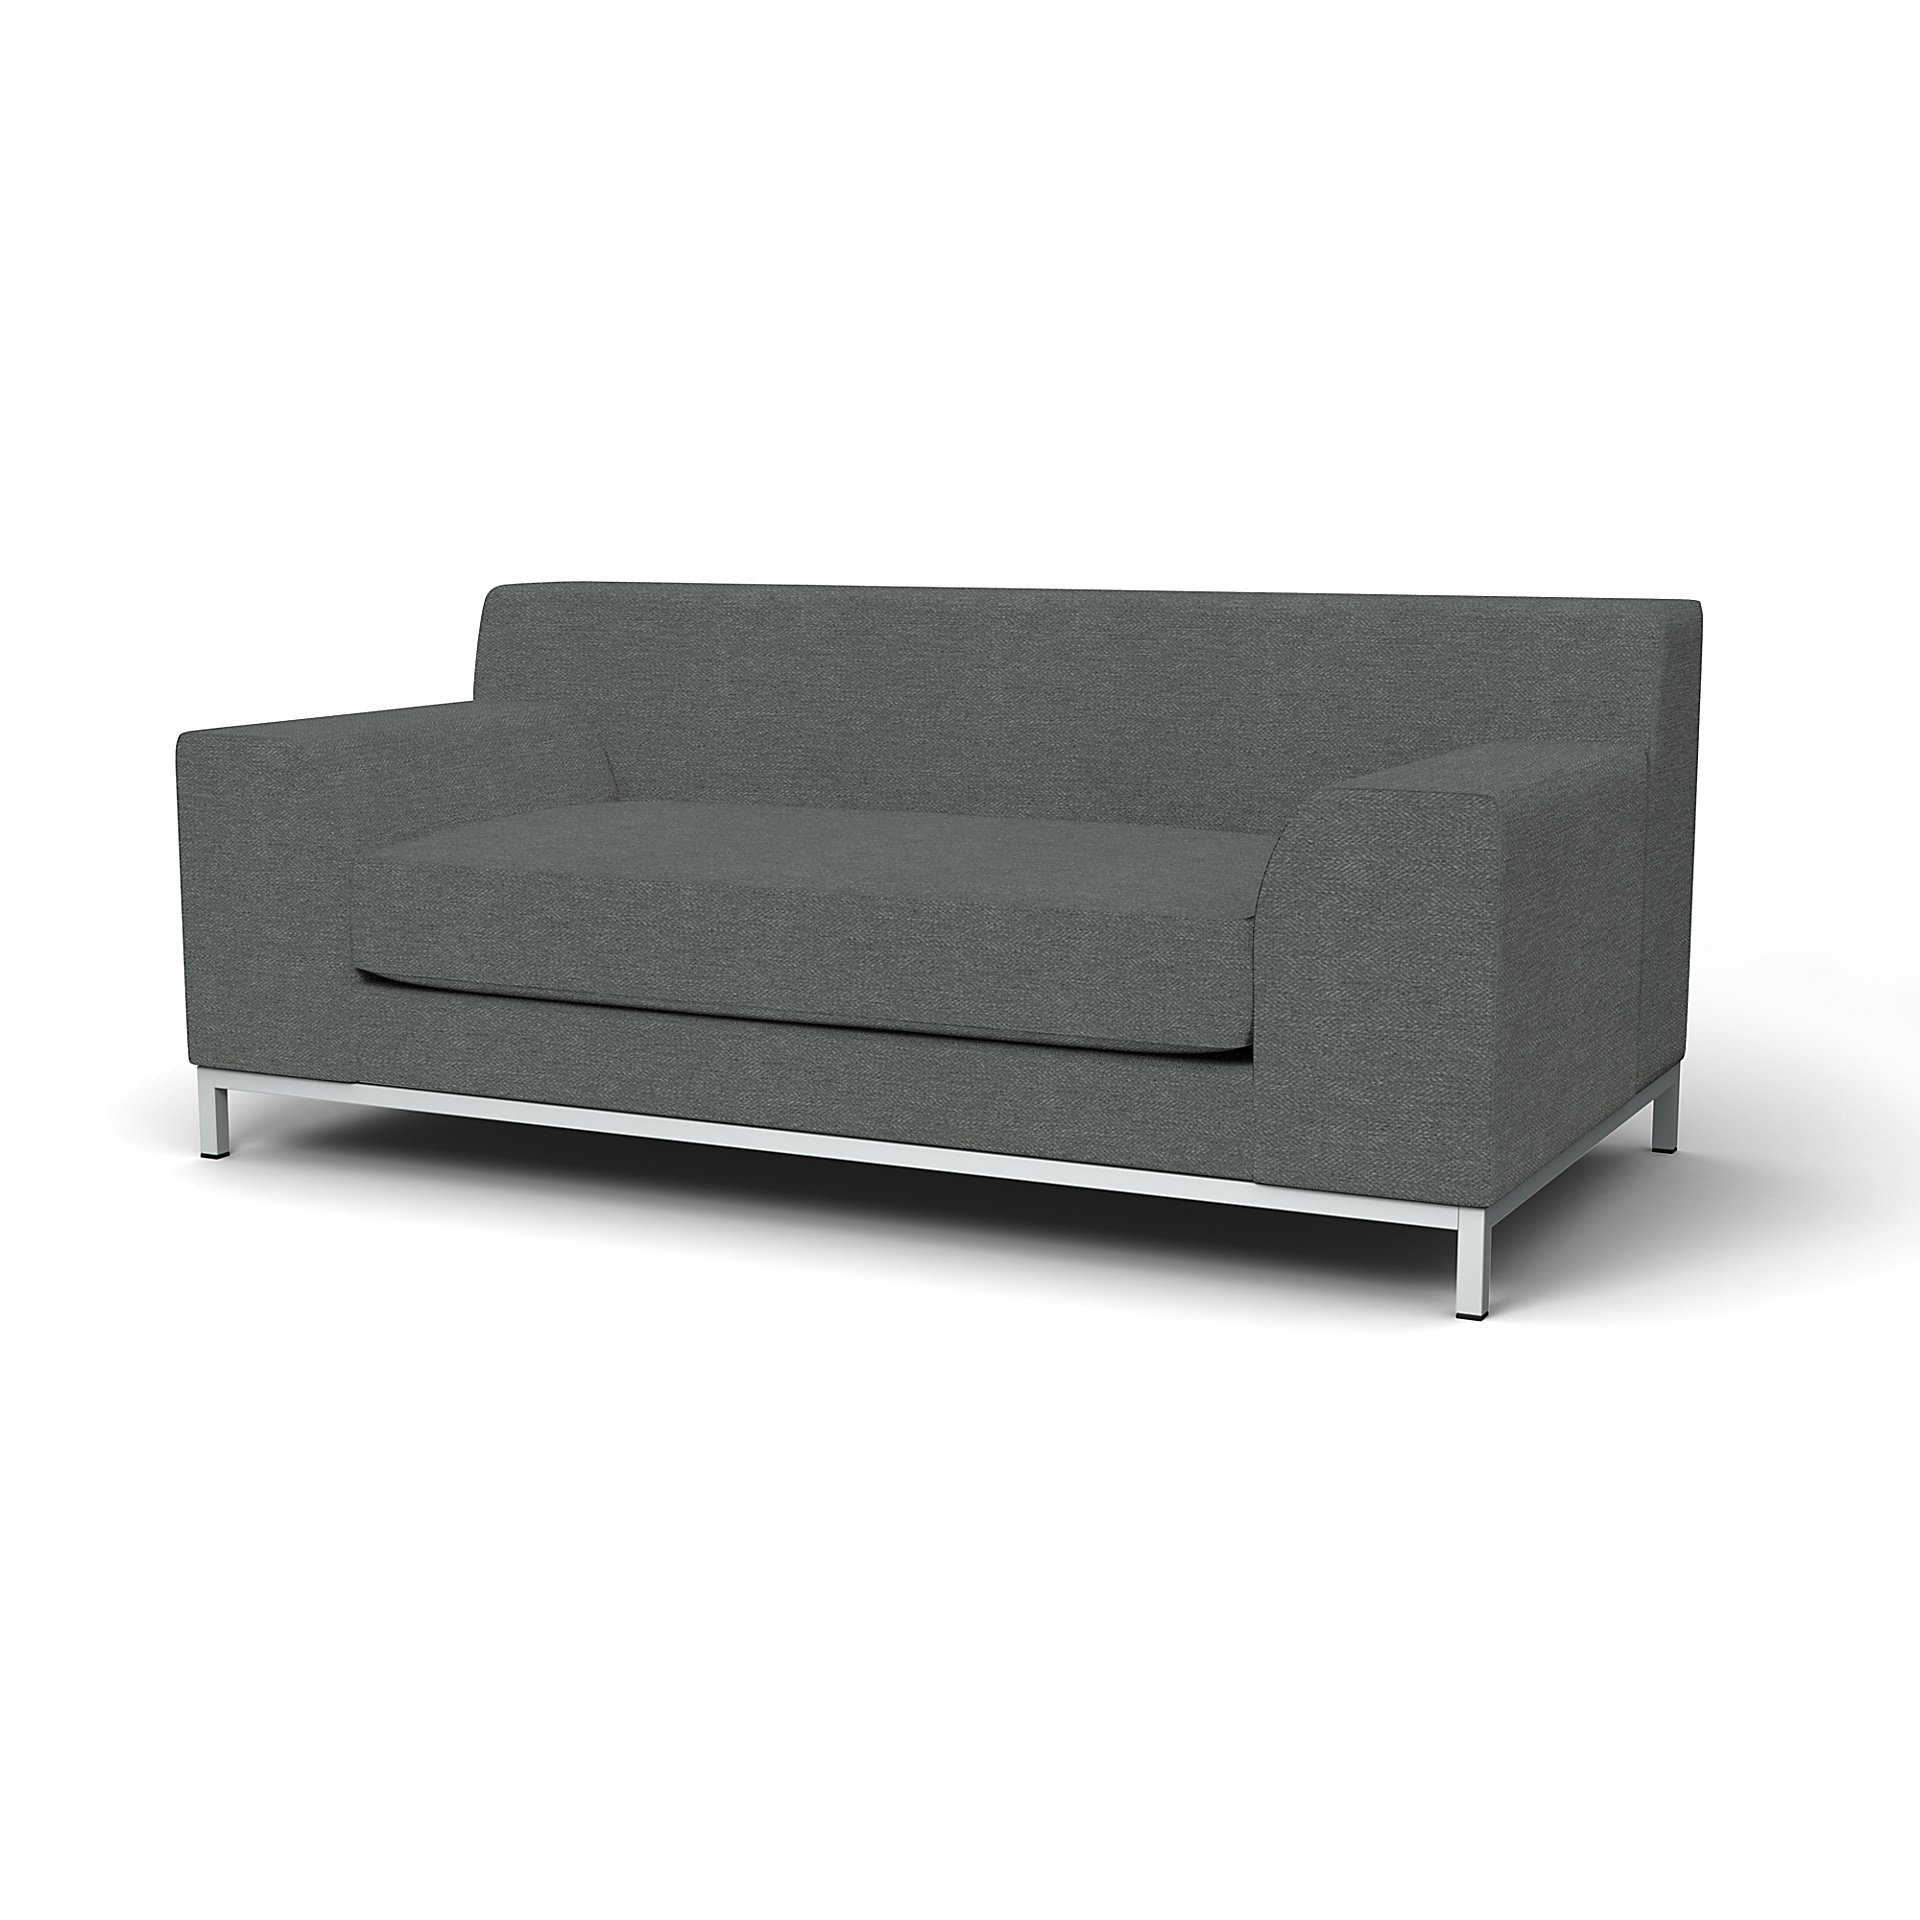 IKEA - Kramfors 2 Seater Sofa Cover, Laurel, Boucle & Texture - Bemz